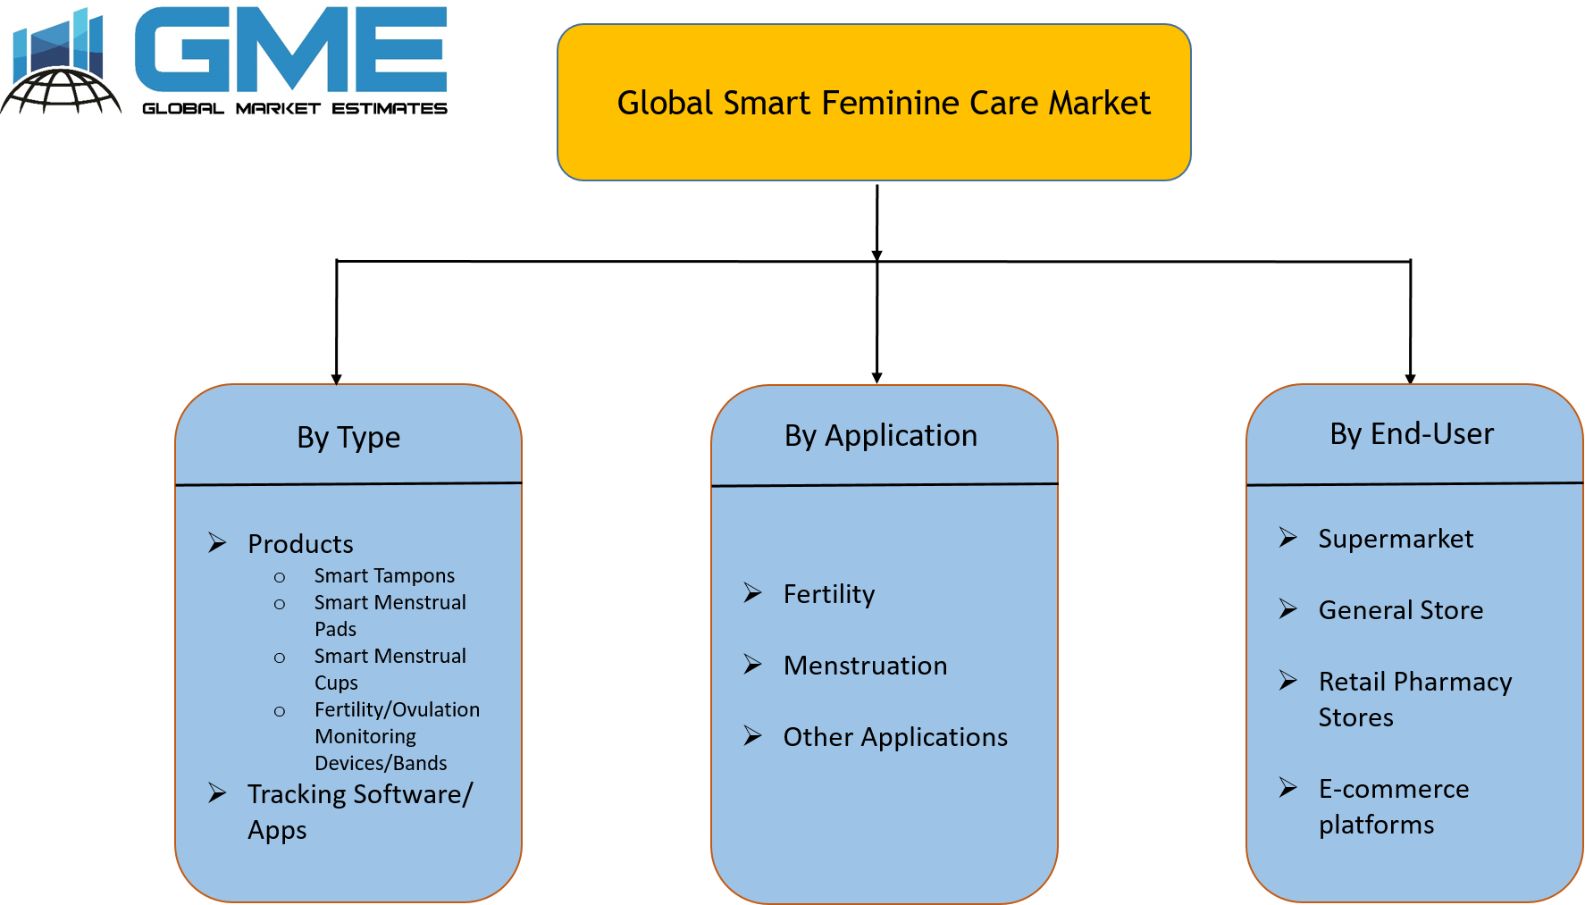 Smart Feminine Care Market Segmentation